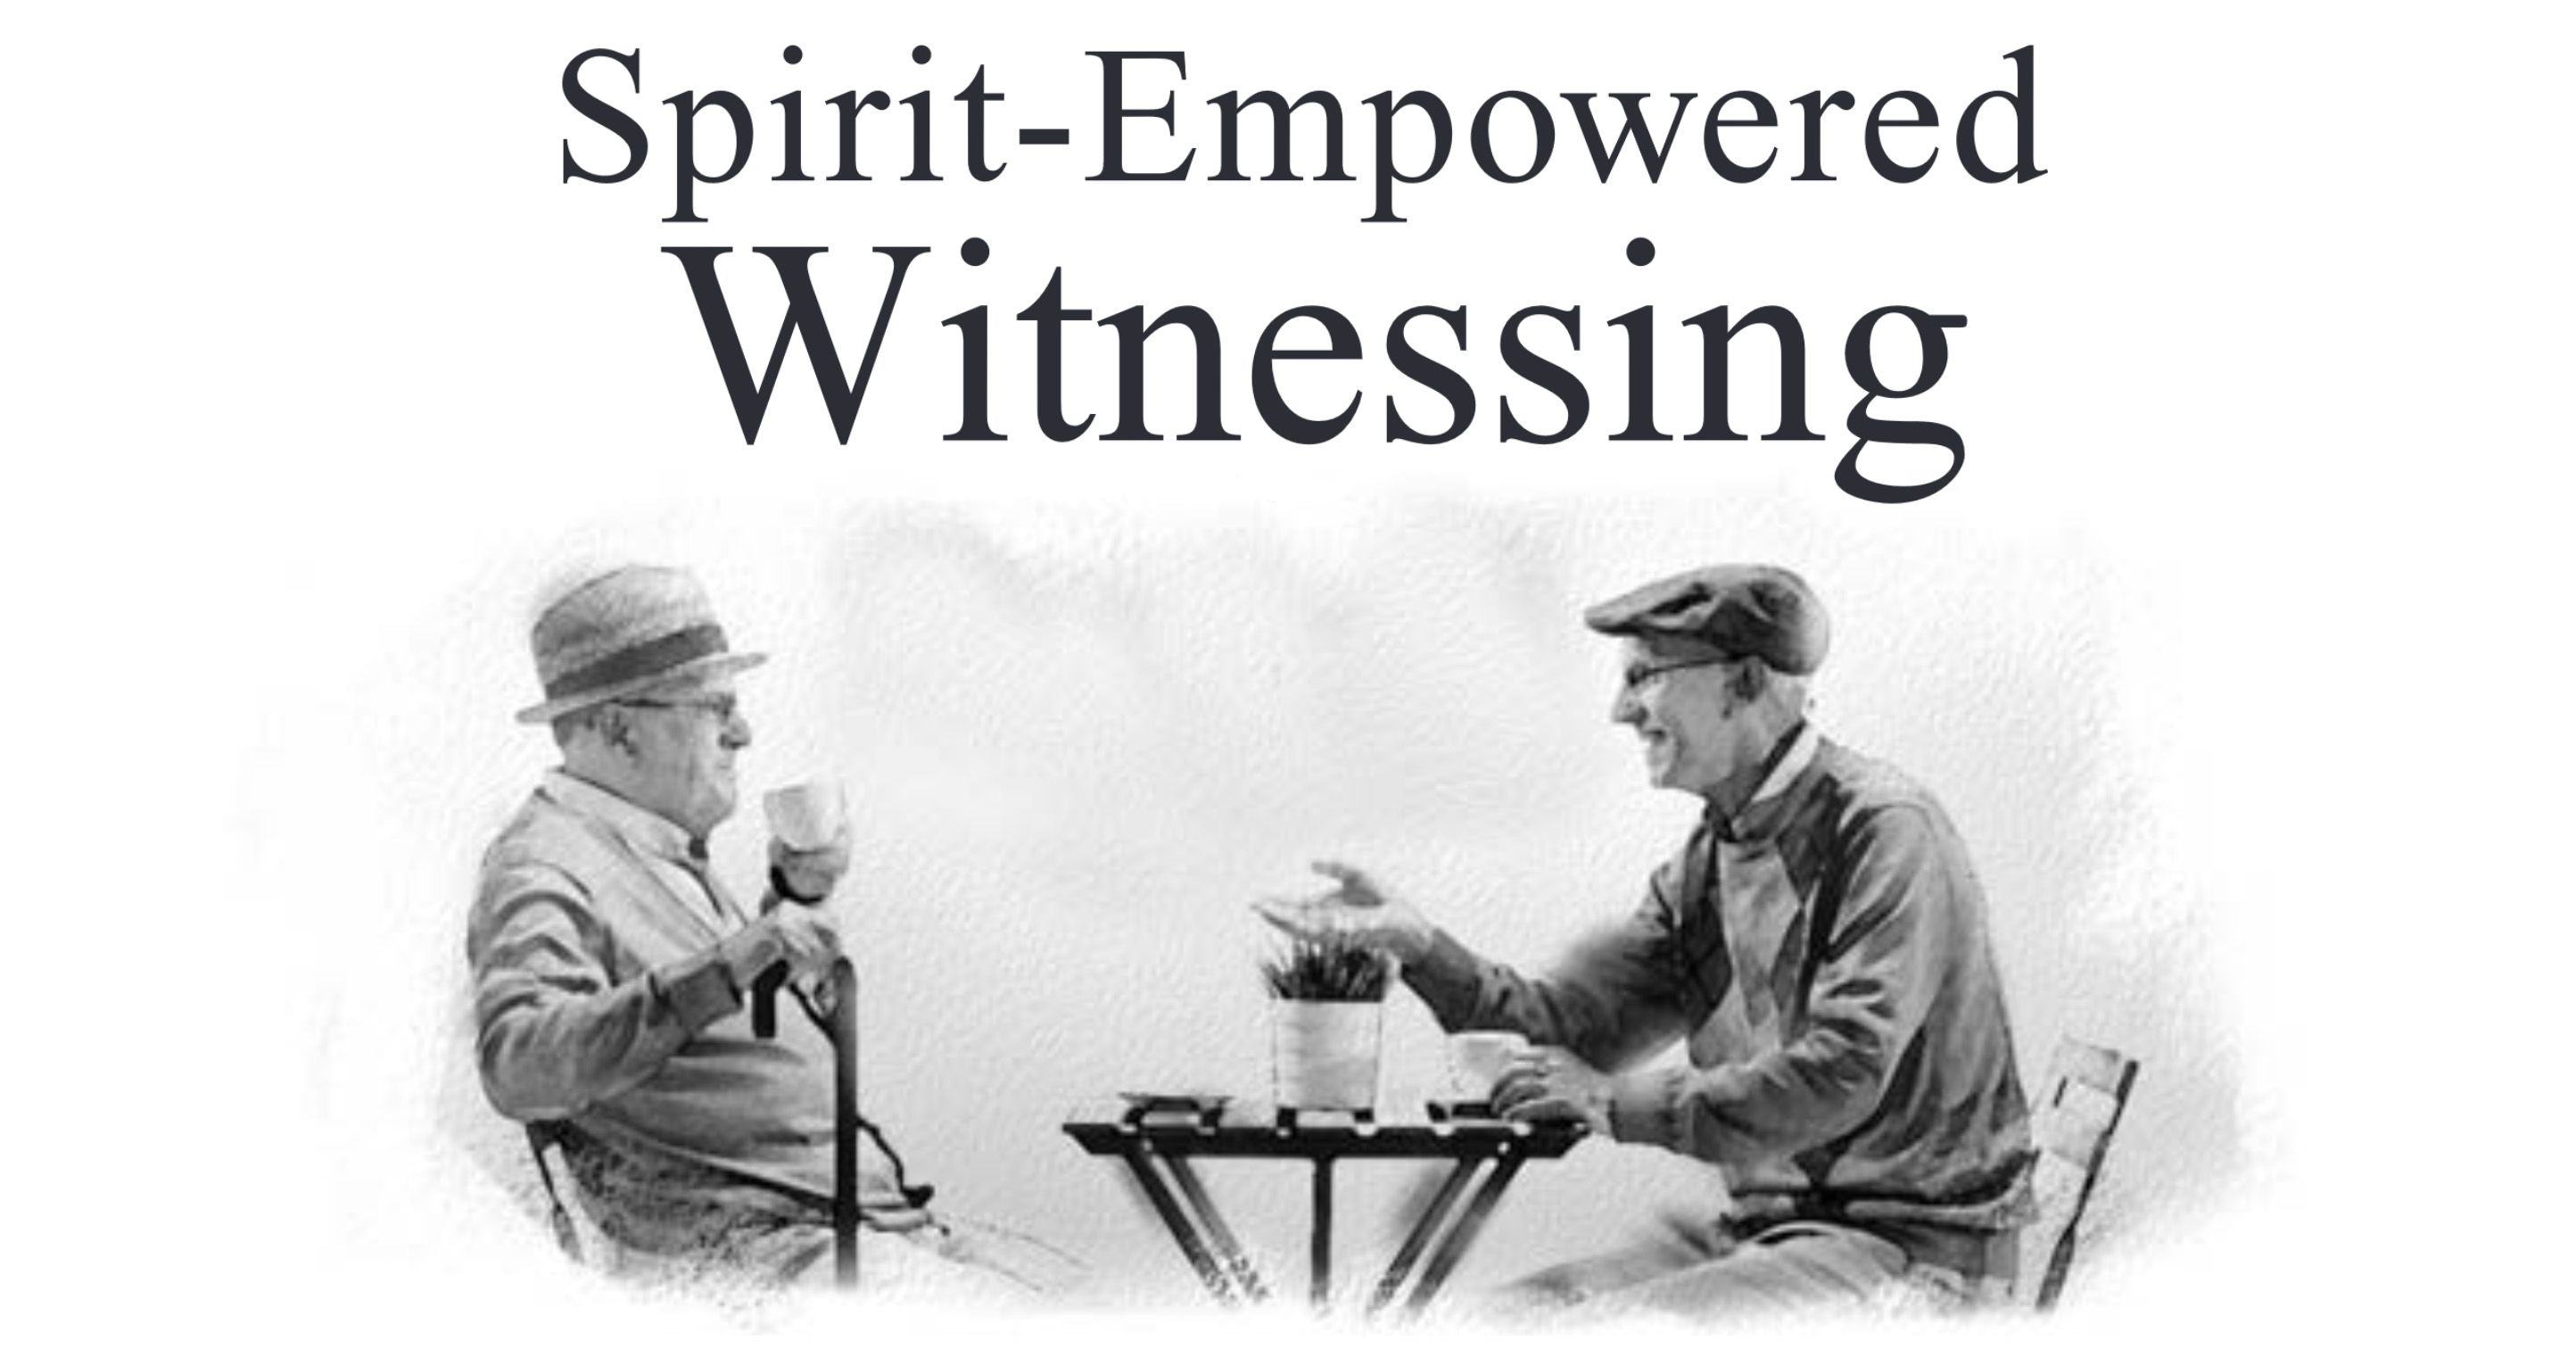 Spirit-Empowered Witnessing